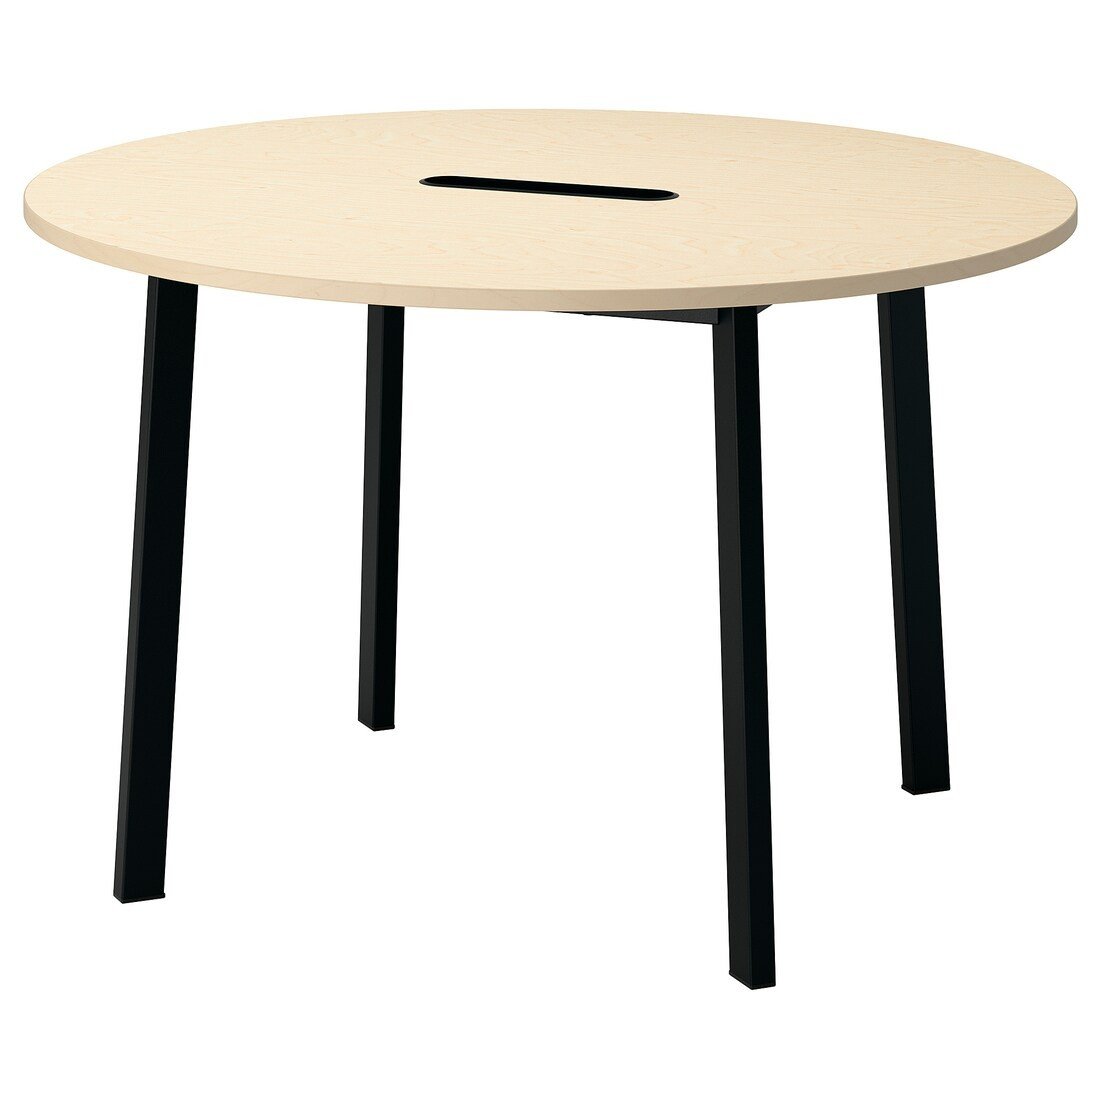 MITTZON конференц-стол, круглая береза / черный шпон, 120x75 см